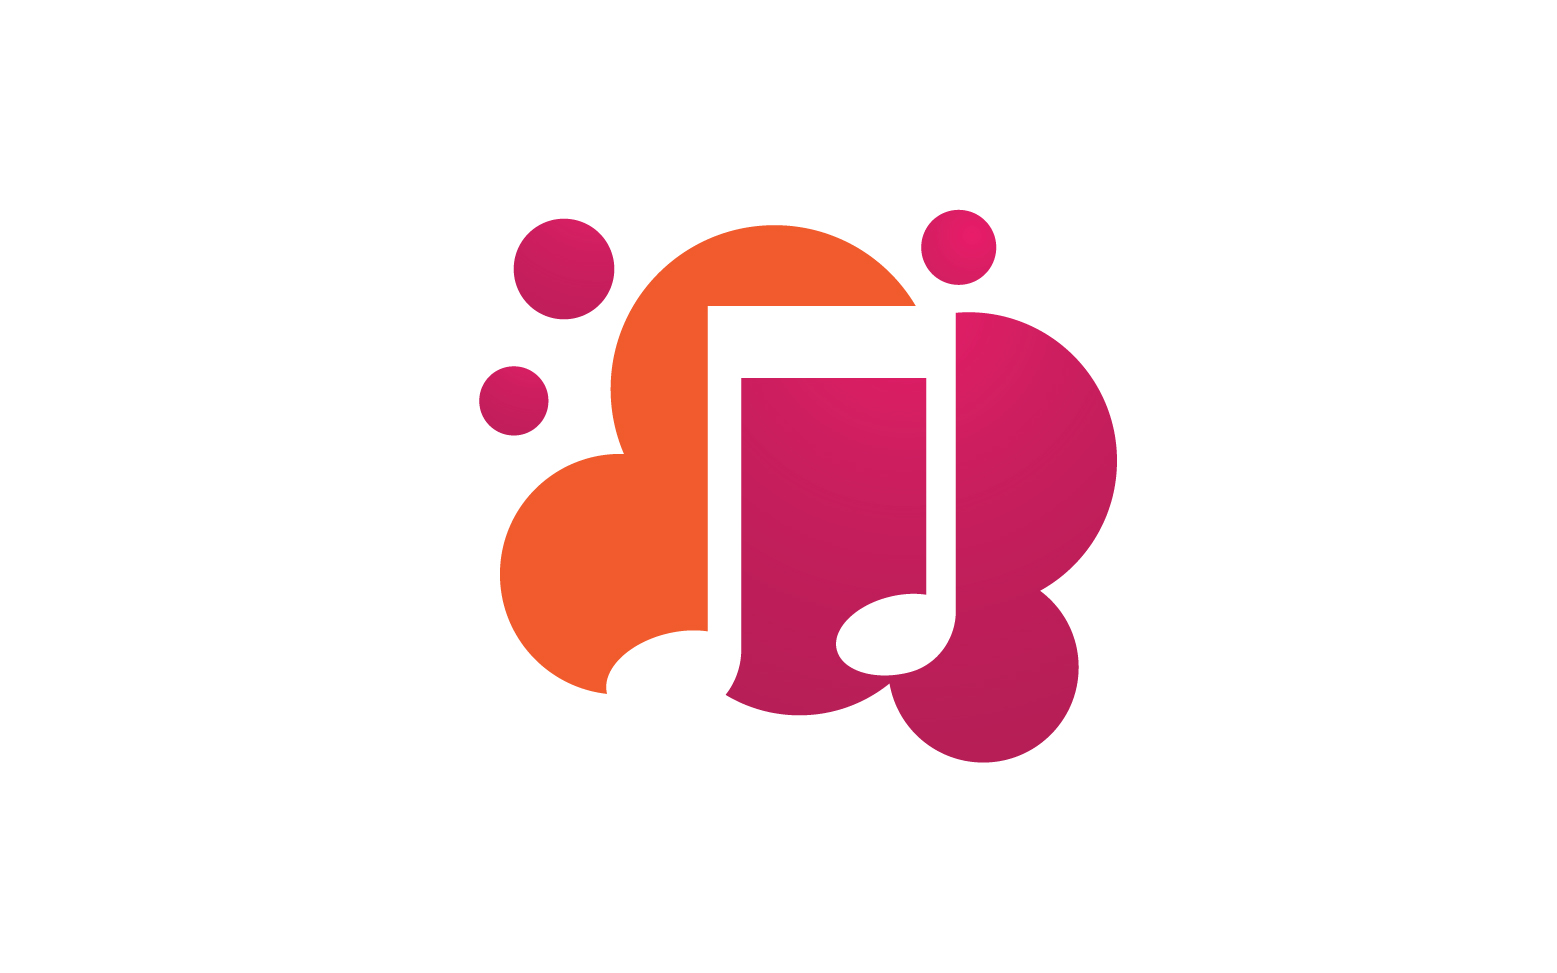 Music sound player app icon logo v2